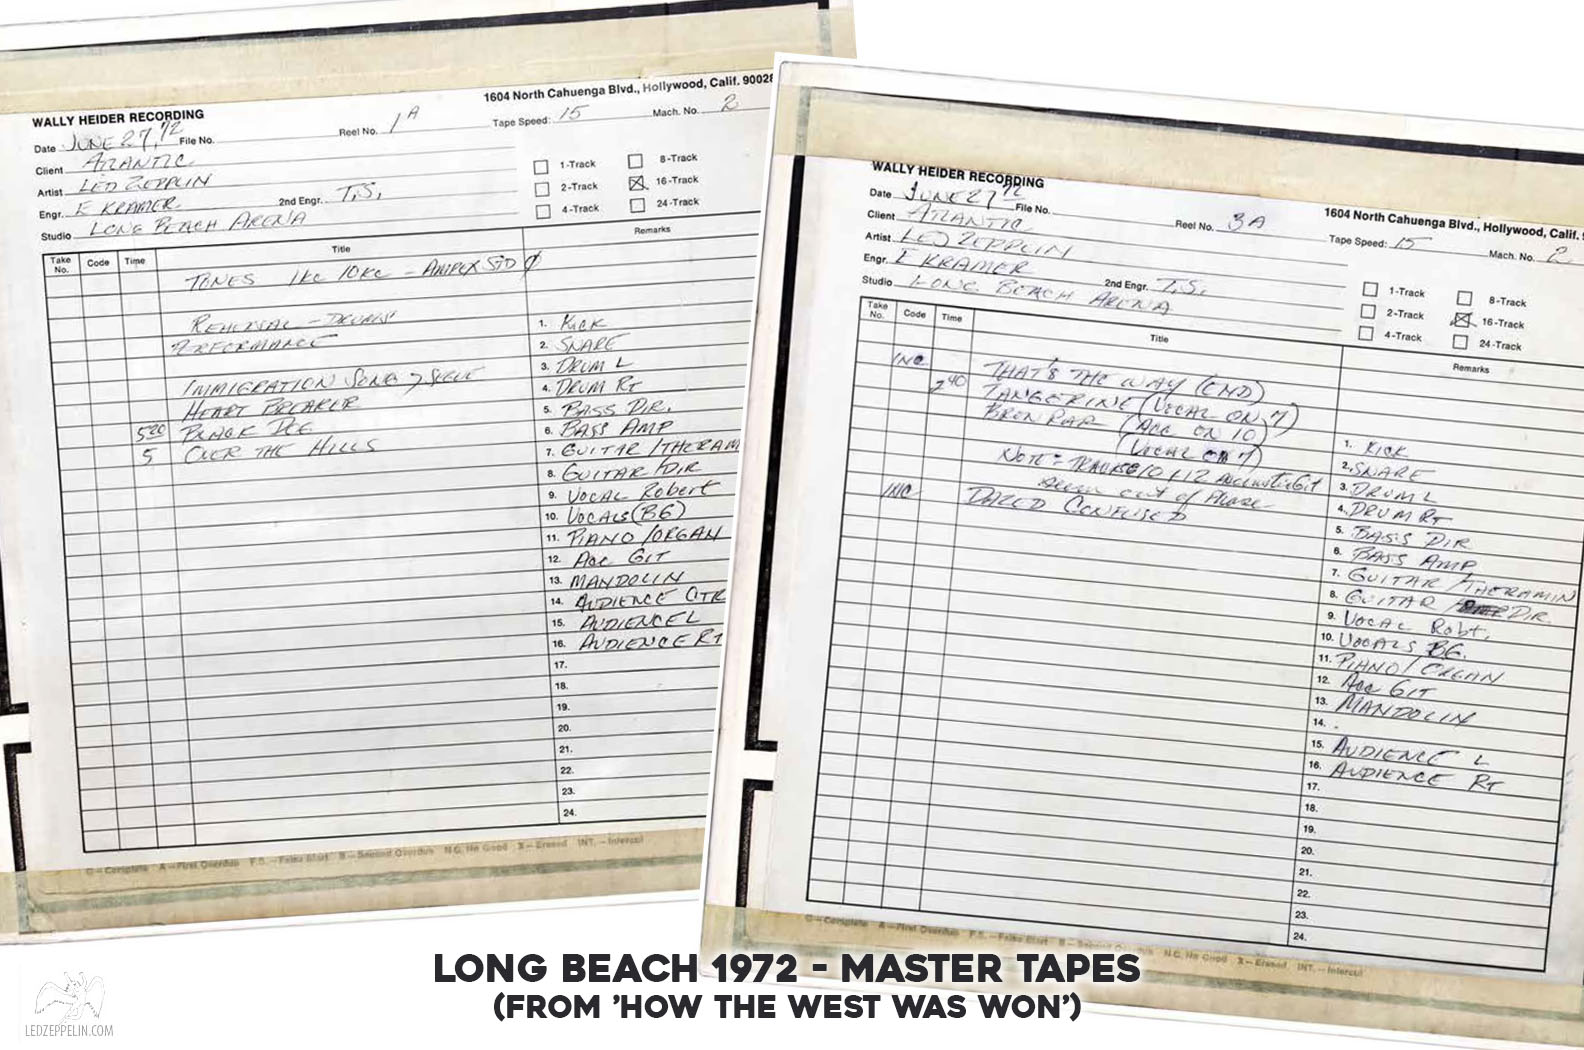 Long Beach 1972 - Master Tapes